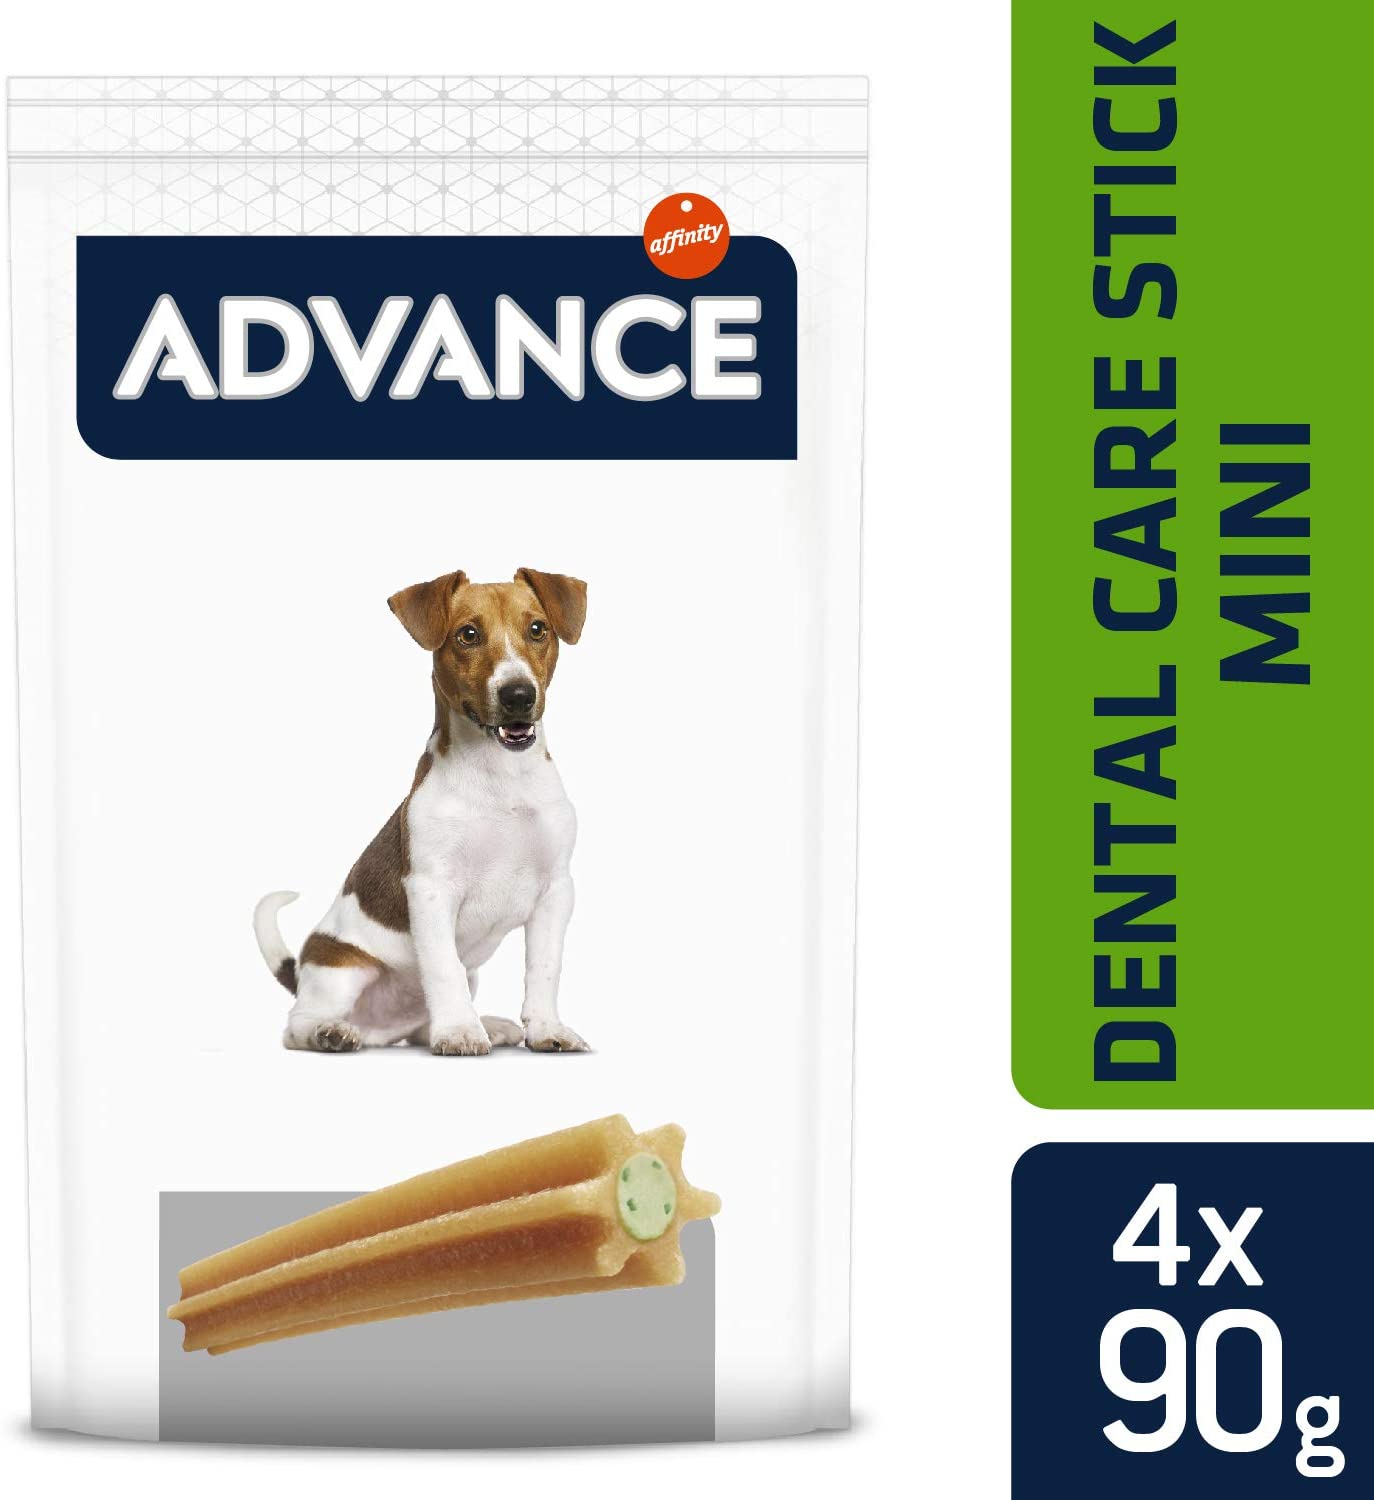  Advance Advance Snacks Dental Care Stick Mini para Perro - 360 gr 